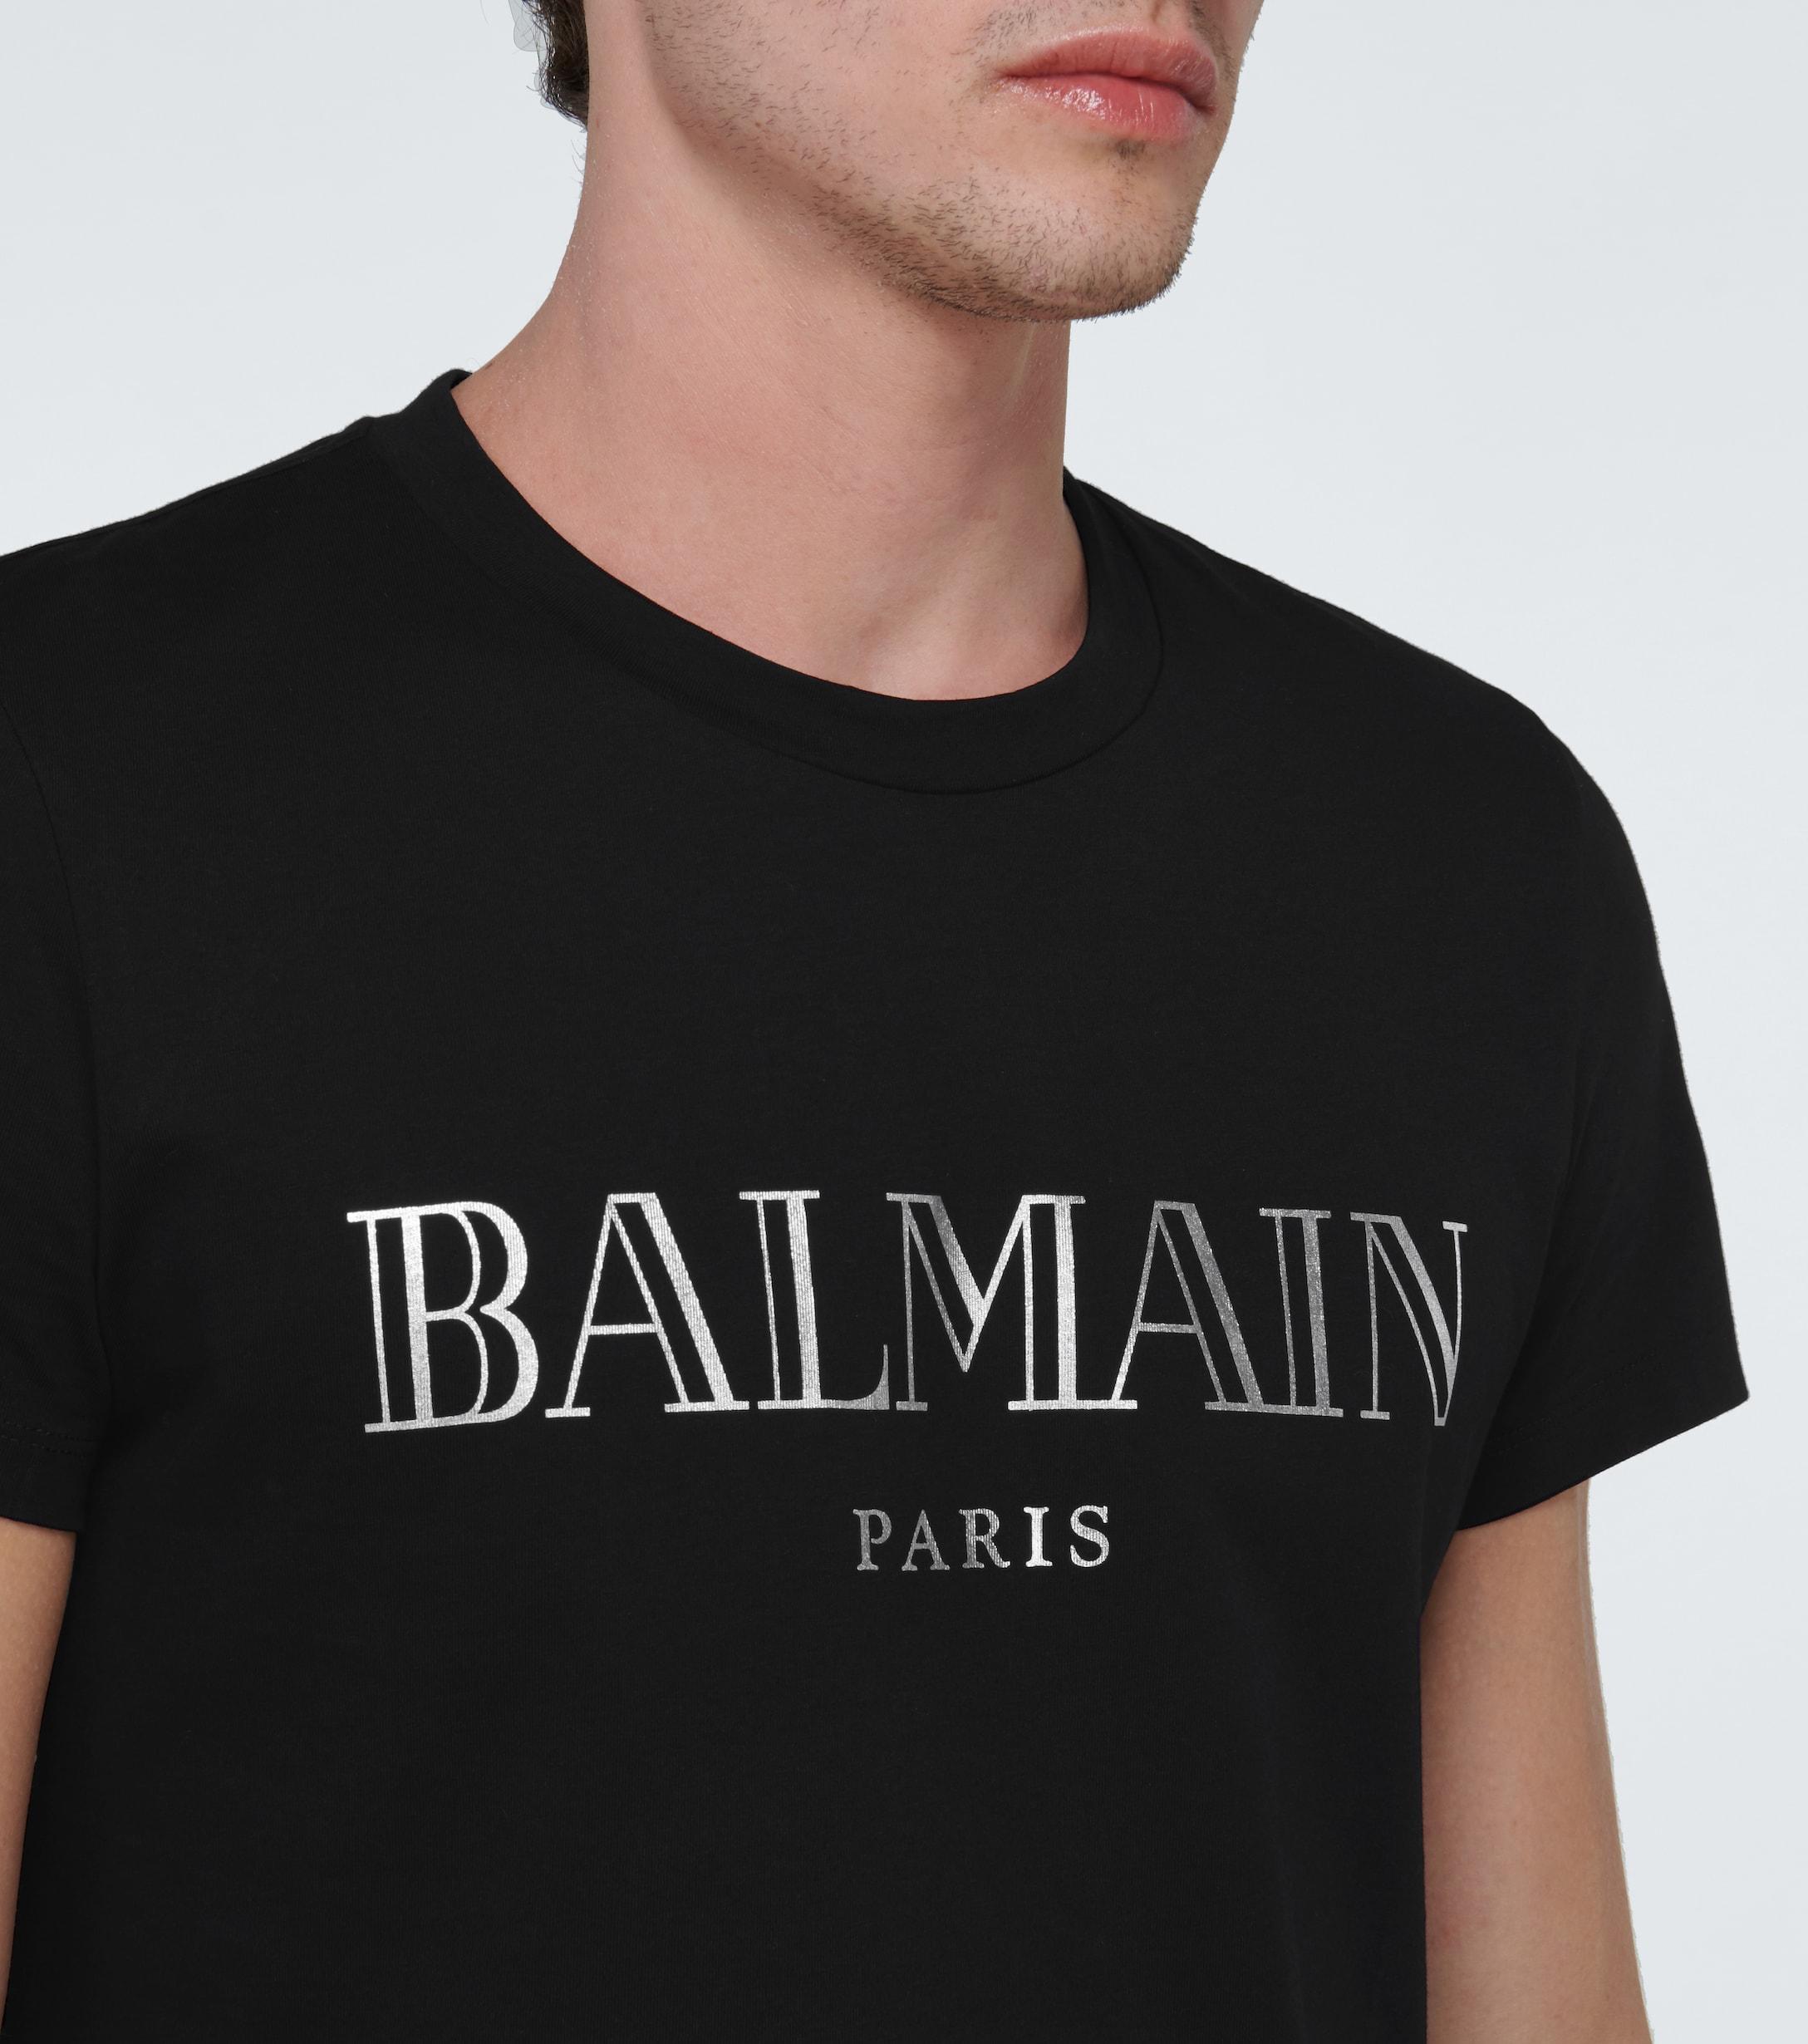 Balmain Paris in Men | Lyst